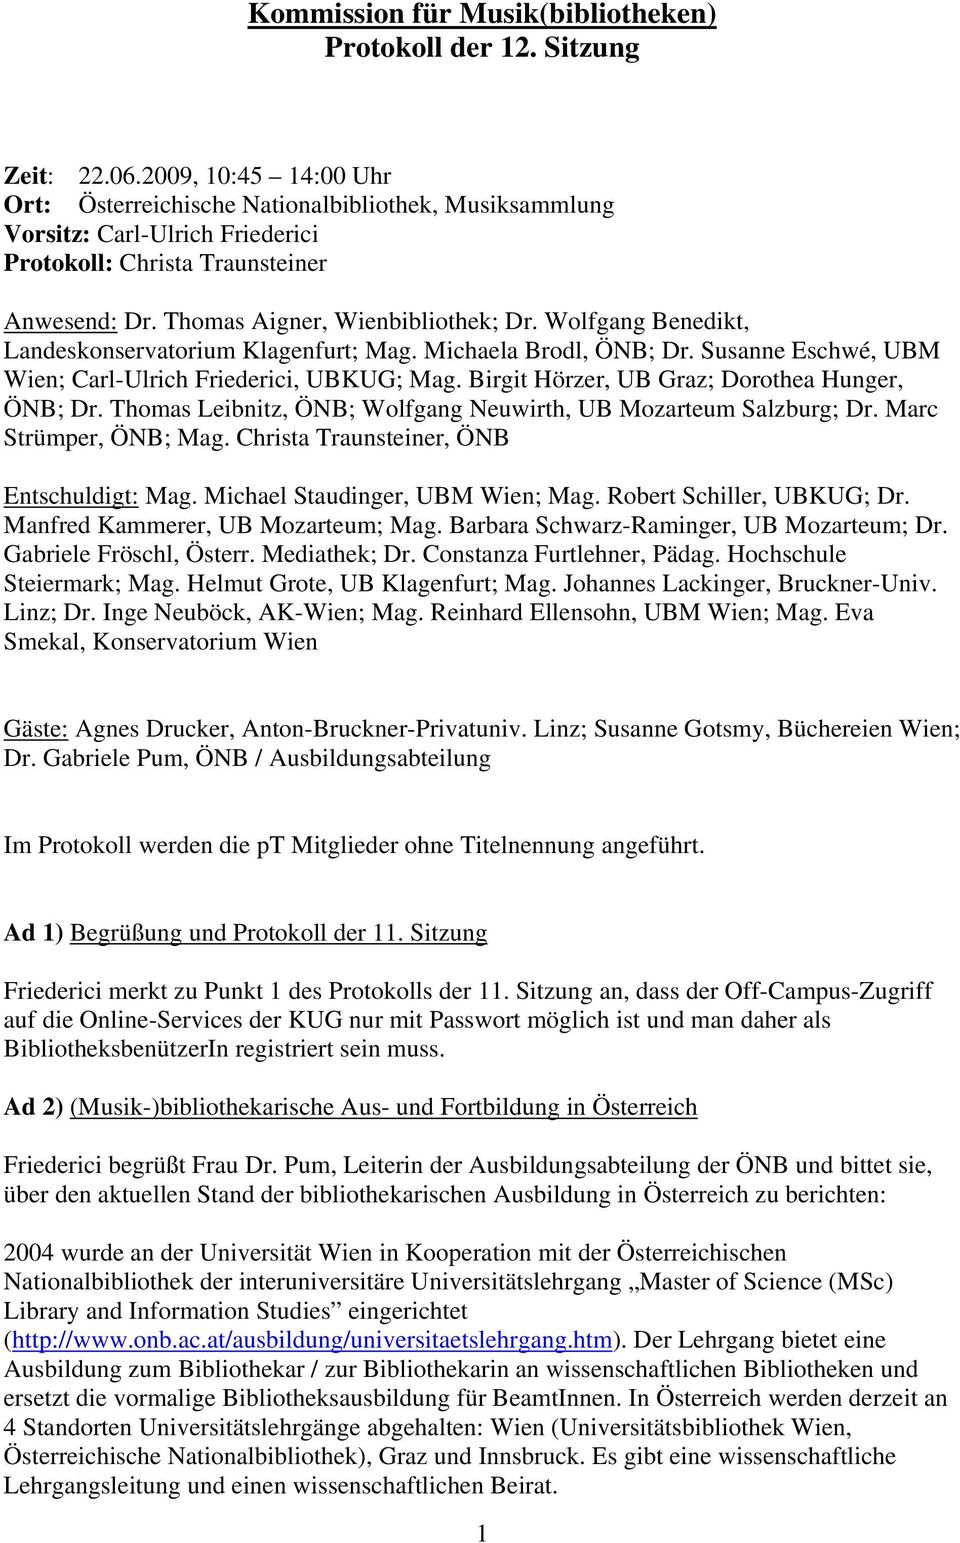 Wolfgang Benedikt, Landeskonservatorium Klagenfurt; Mag. Michaela Brodl, ÖNB; Dr. Susanne Eschwé, UBM Wien; Carl-Ulrich Friederici, UBKUG; Mag. Birgit Hörzer, UB Graz; Dorothea Hunger, ÖNB; Dr.